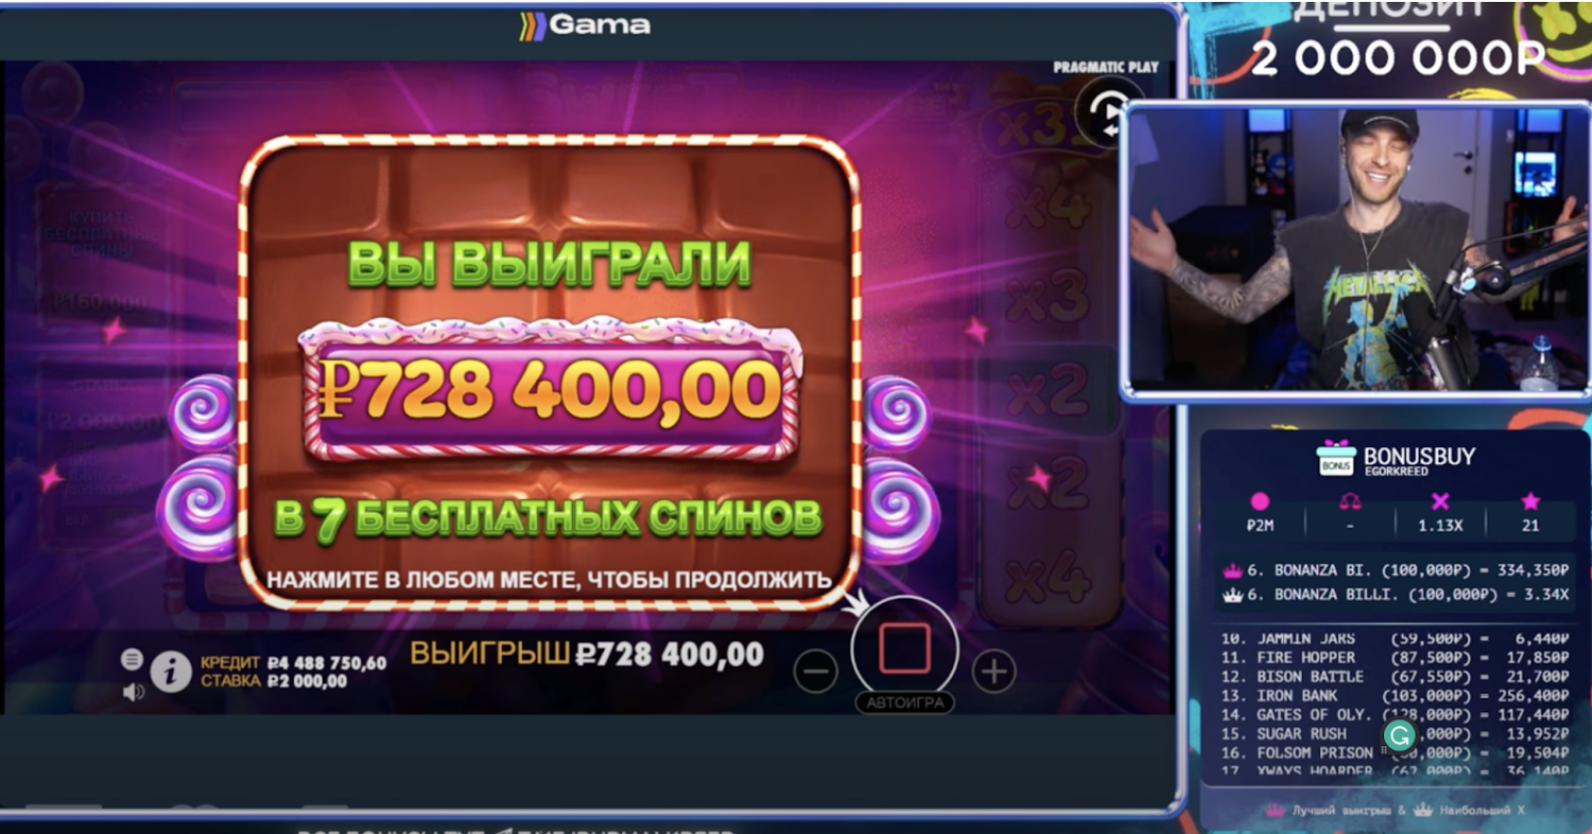 CatAffs Sponsors a 1 Million Ruble Stream: Benefits for Affiliates